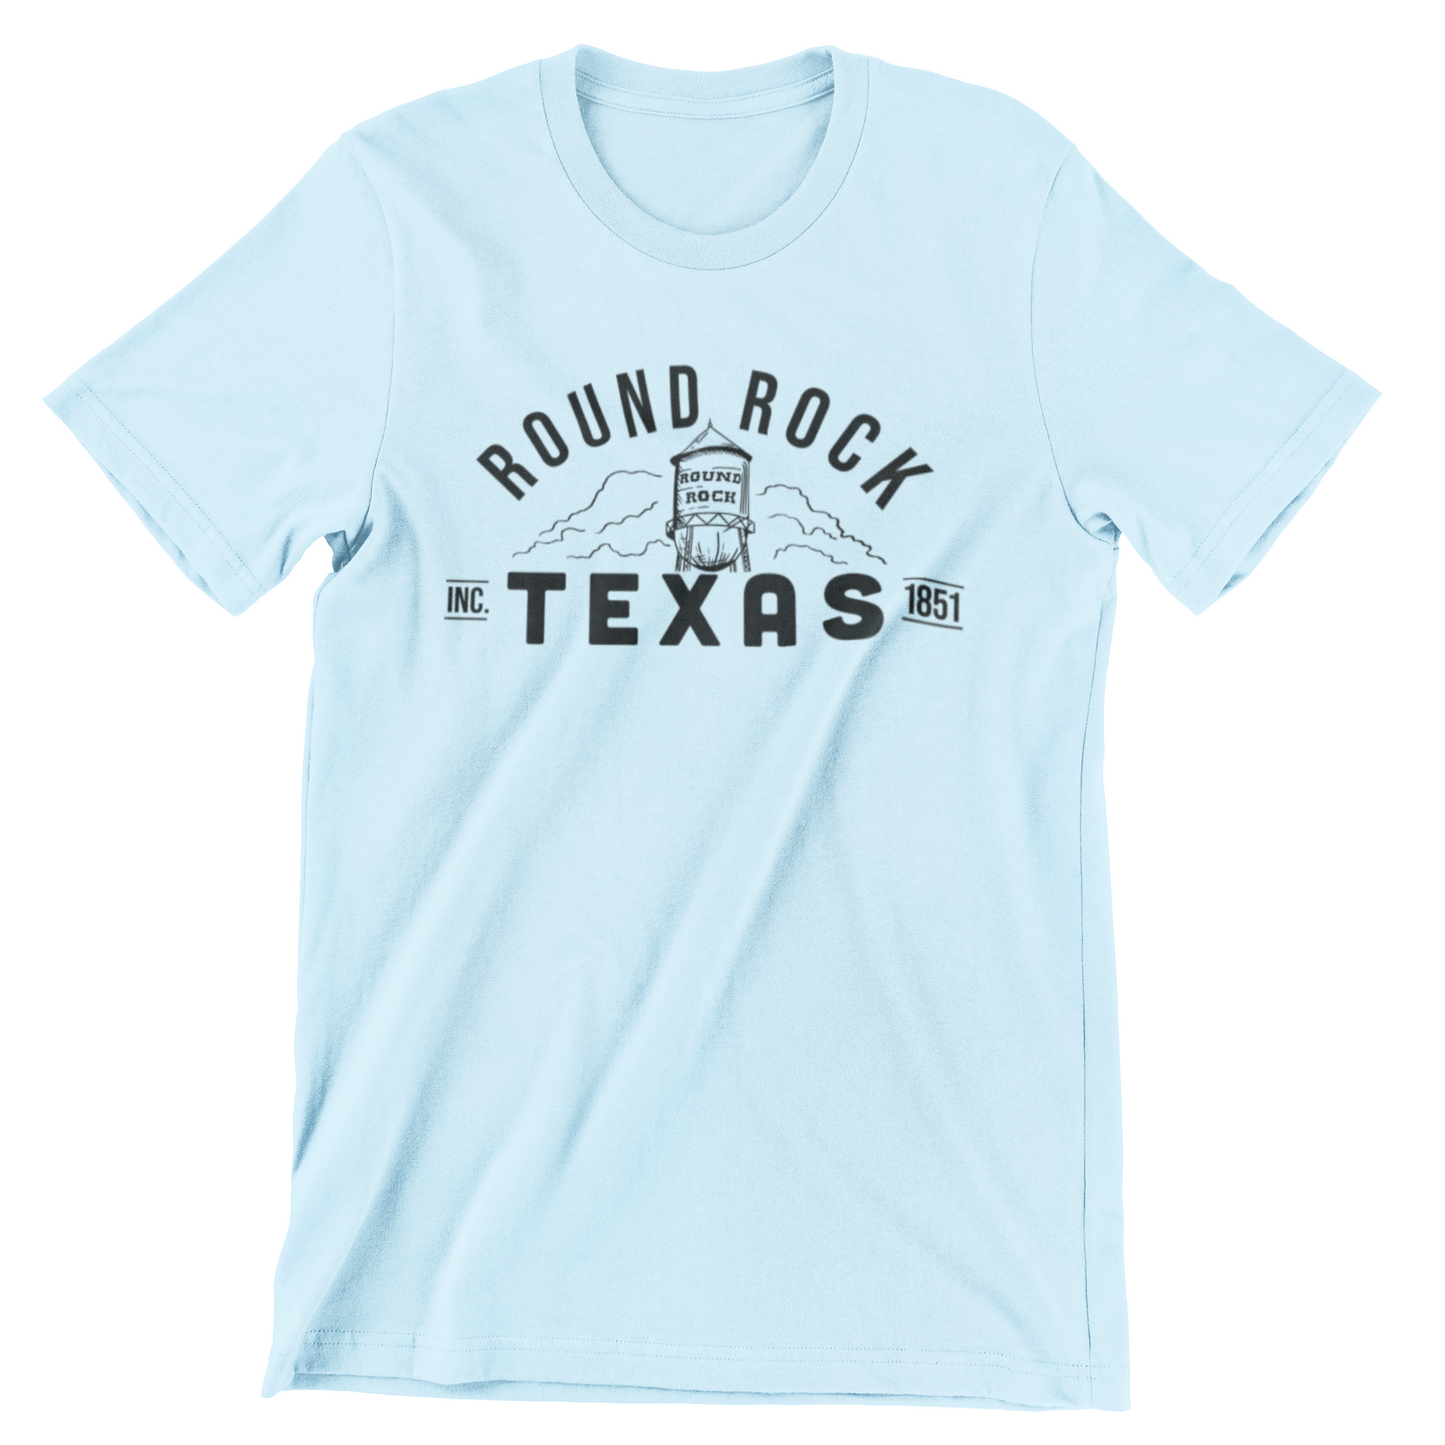 Round Rock Texas T-shirt